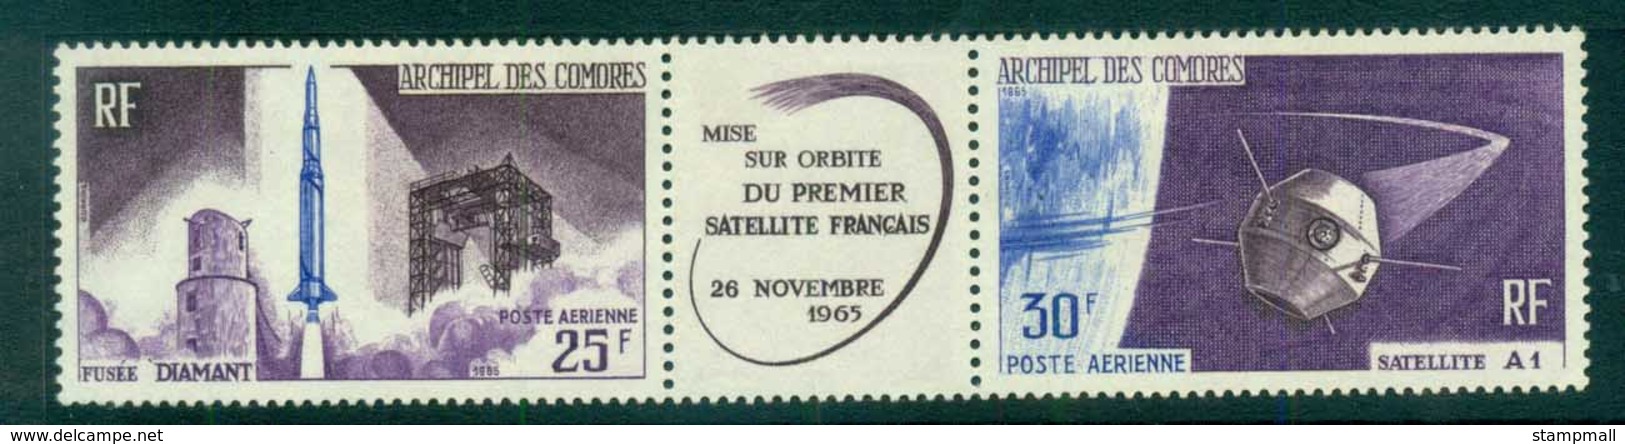 Comoro Is 1966 A1 Satellite Pr + Label MLH Lot73326 - Comoros